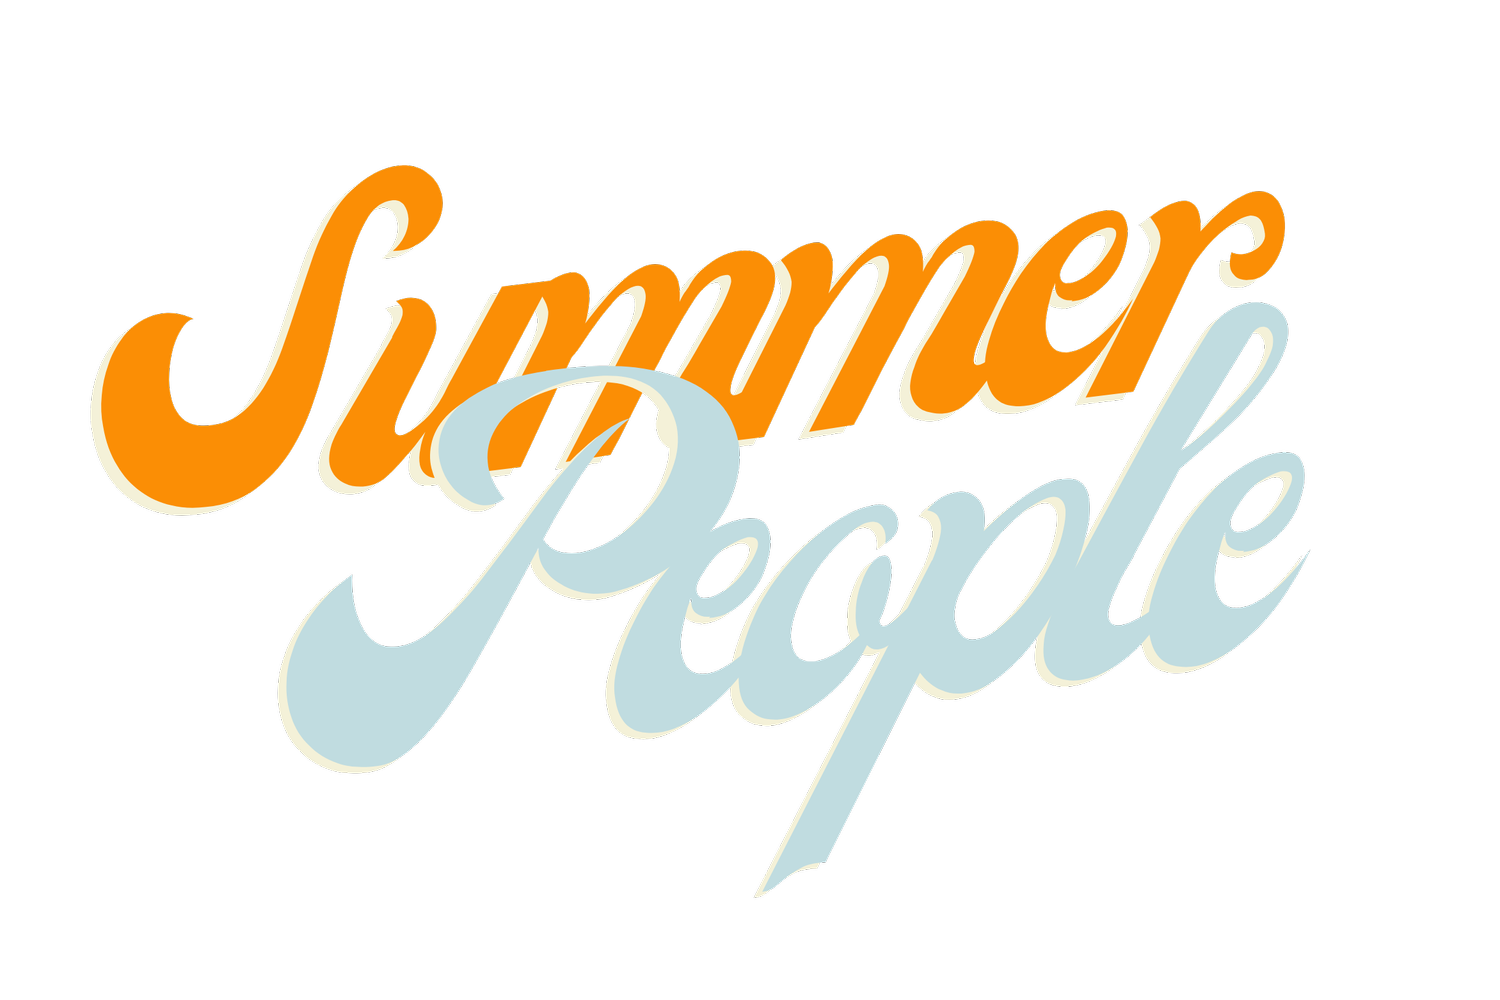 Summer People